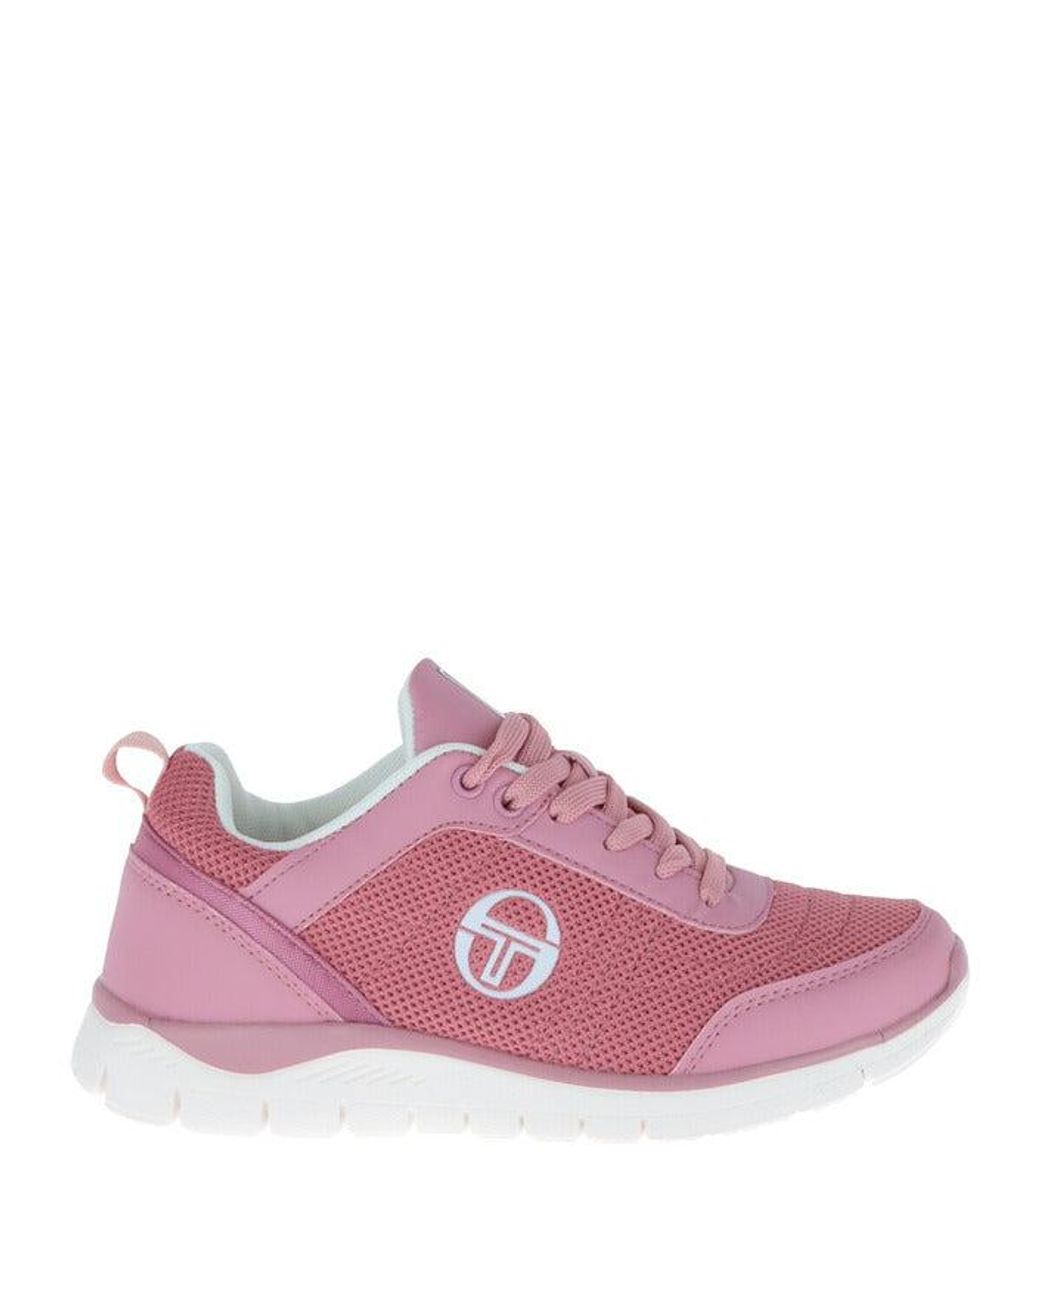 Sergio Tacchini Women Sneakers in Pink | Lyst